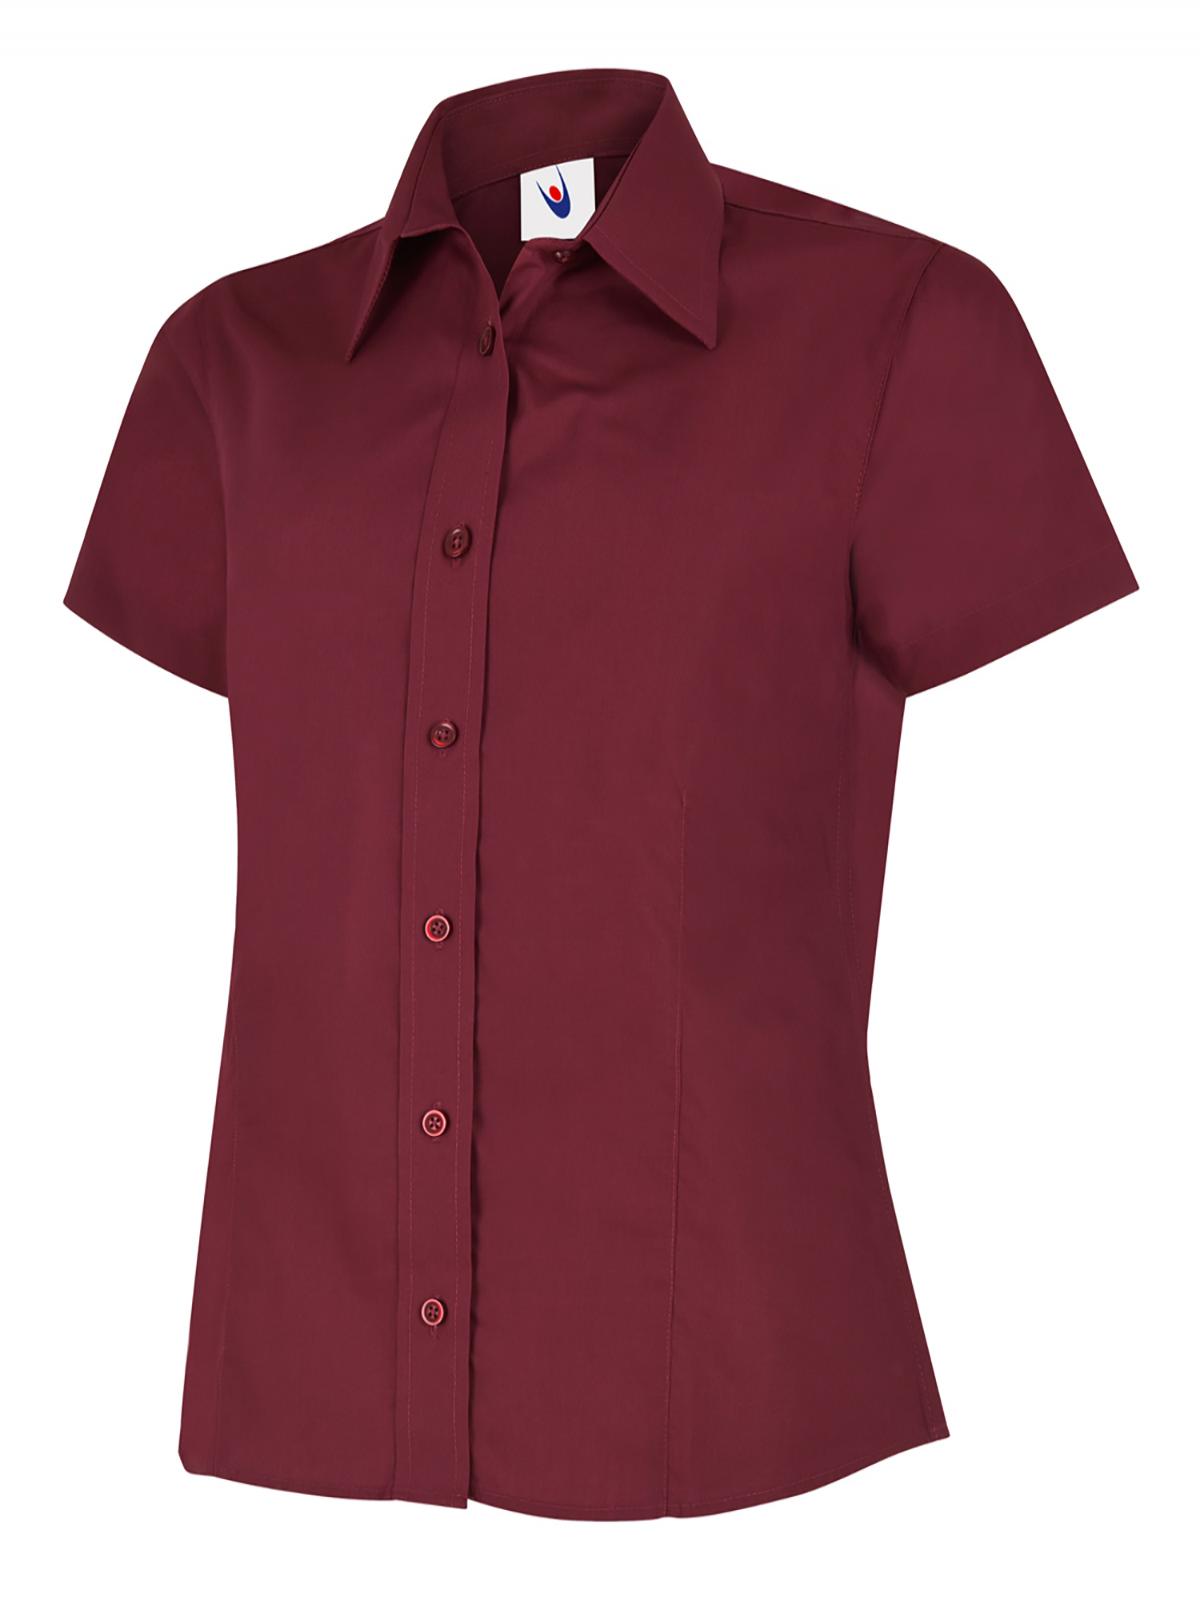 Uneek Ladies Poplin Half Sleeve Shirt UC712 - Burgundy